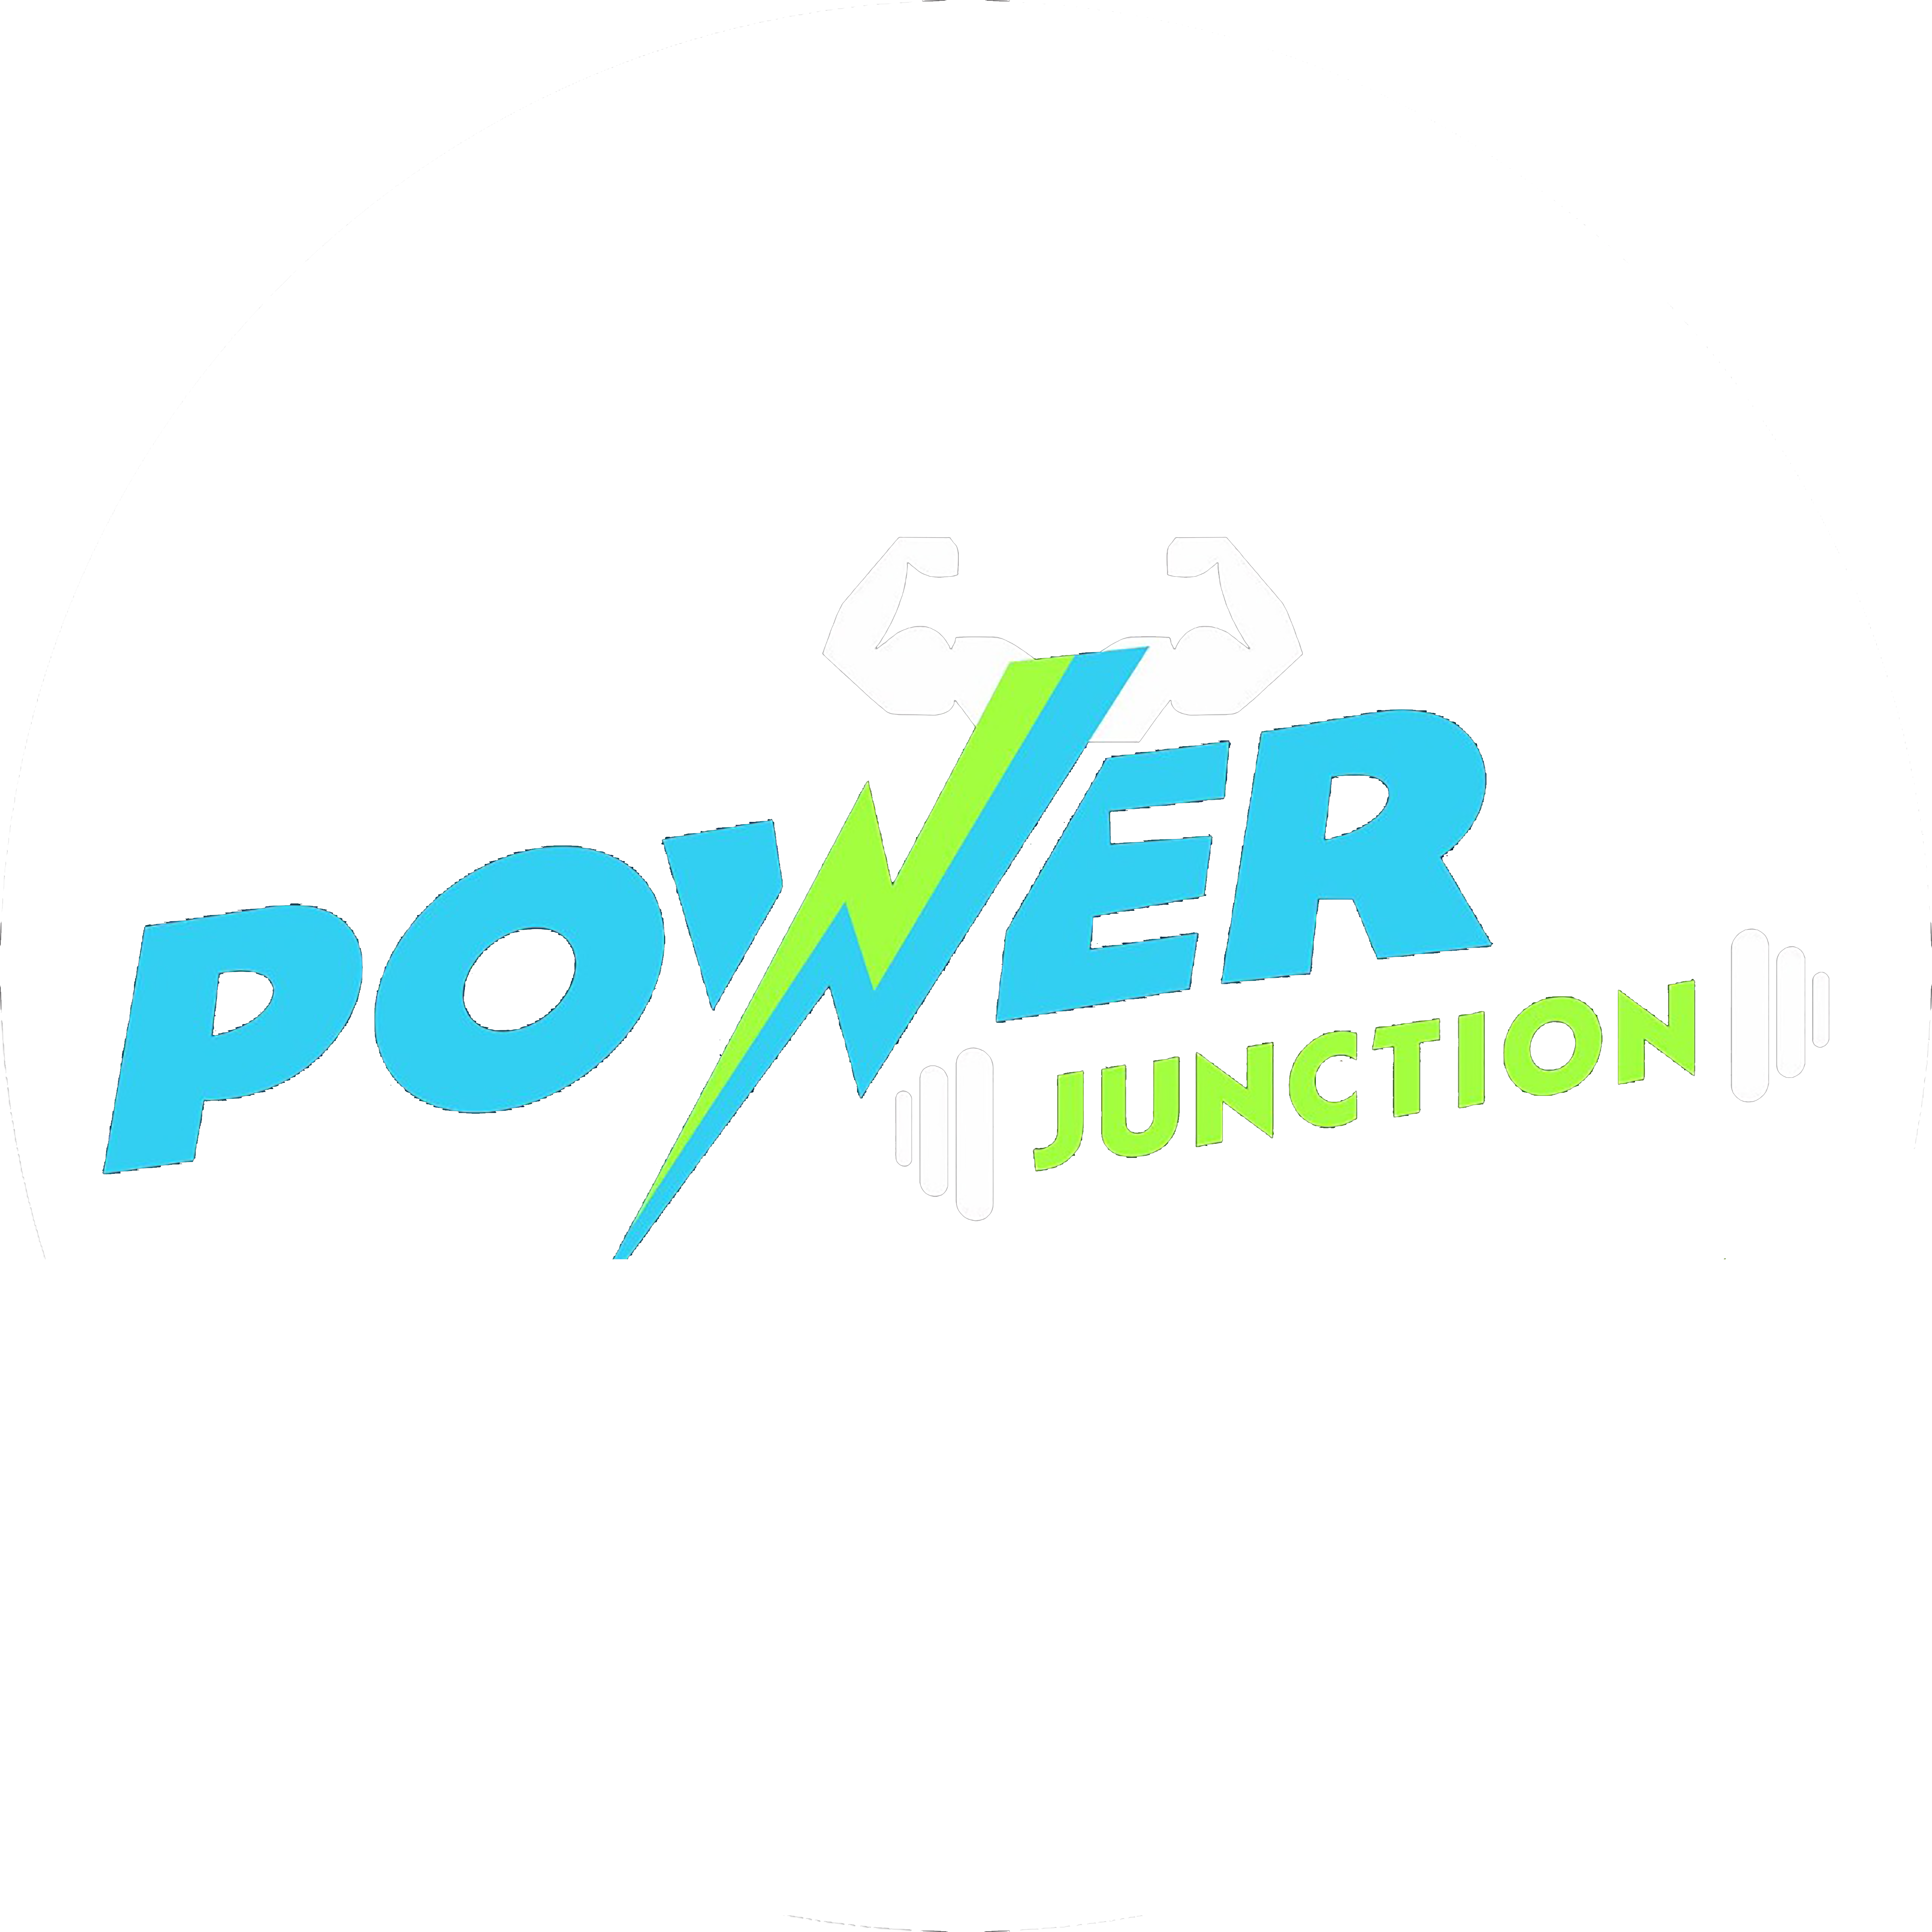 Power Junction Gym & Fitness Studio|Salon|Active Life